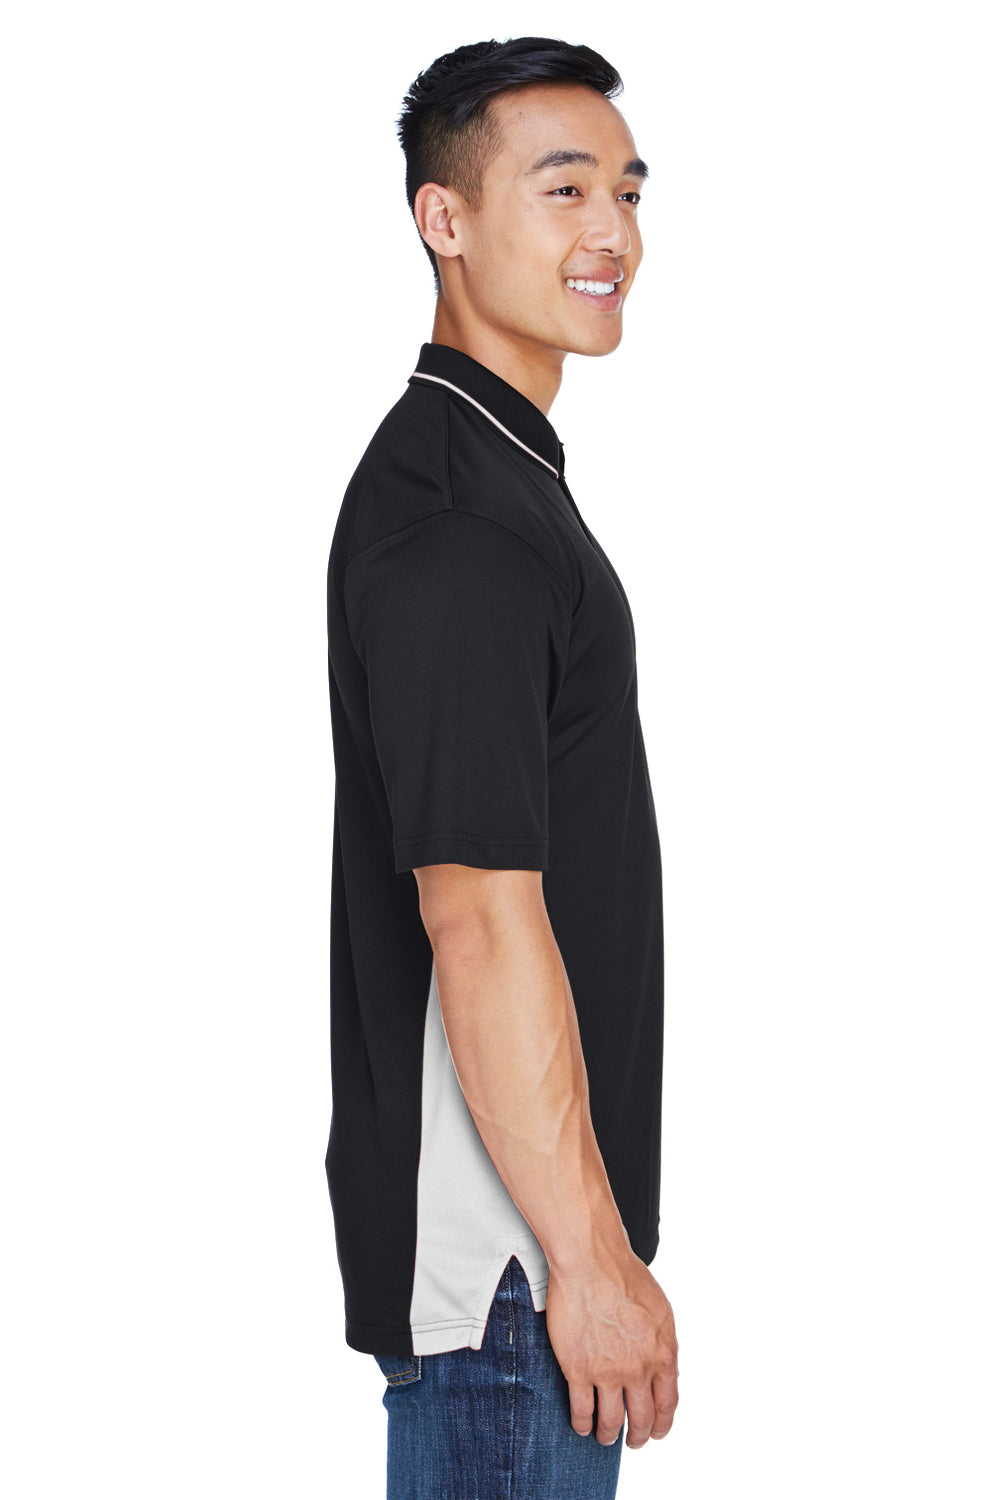 UltraClub 8406 Mens Cool & Dry Moisture Wicking Short Sleeve Polo Shirt Black/Stone Side